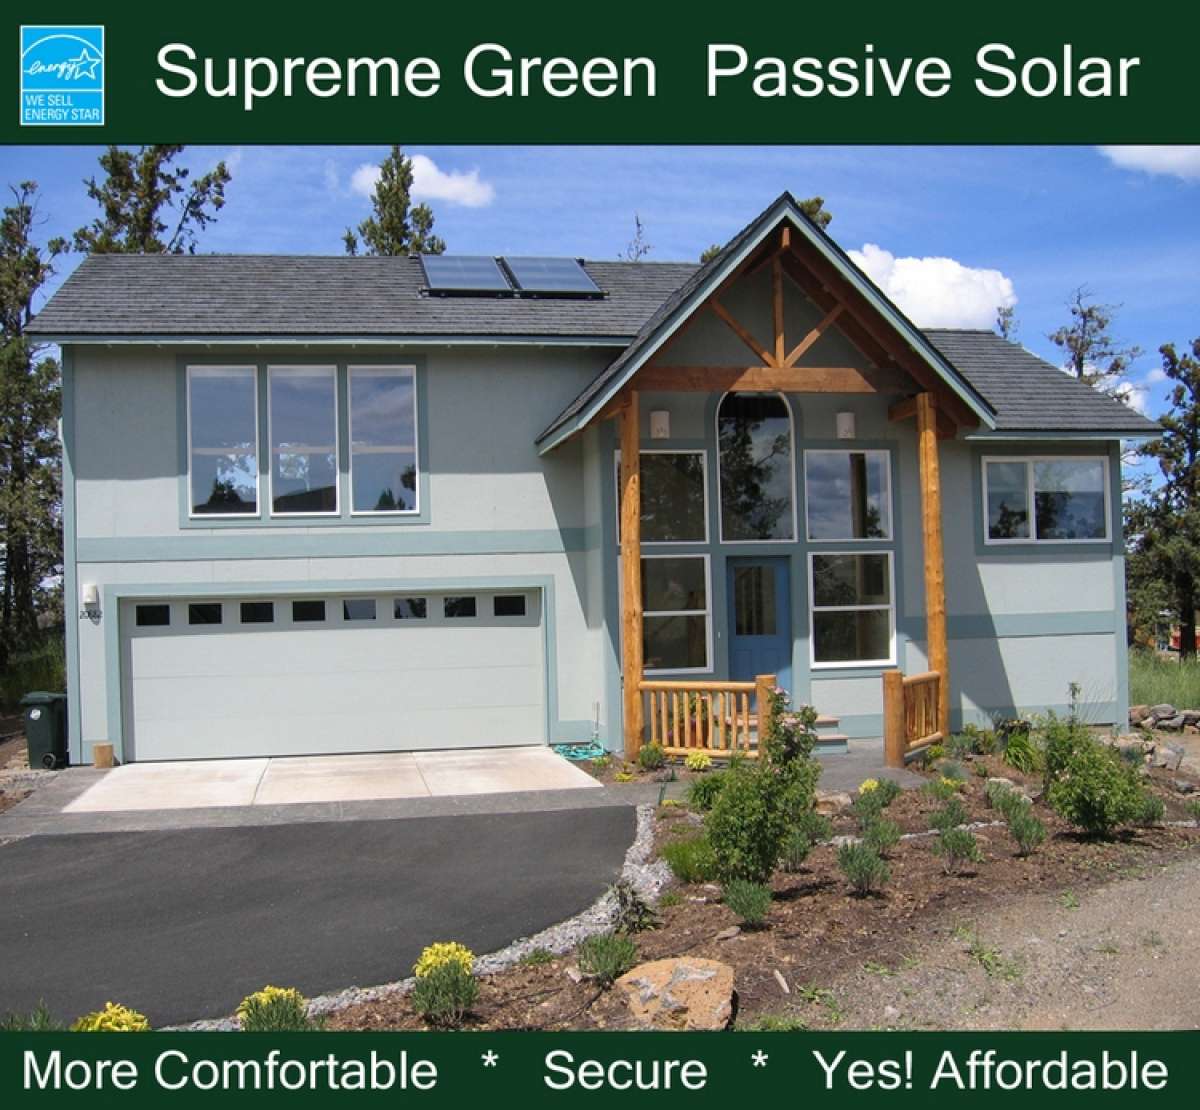  Passive  Solar  Plan  1 775 Square  Feet  3 Bedrooms 2 